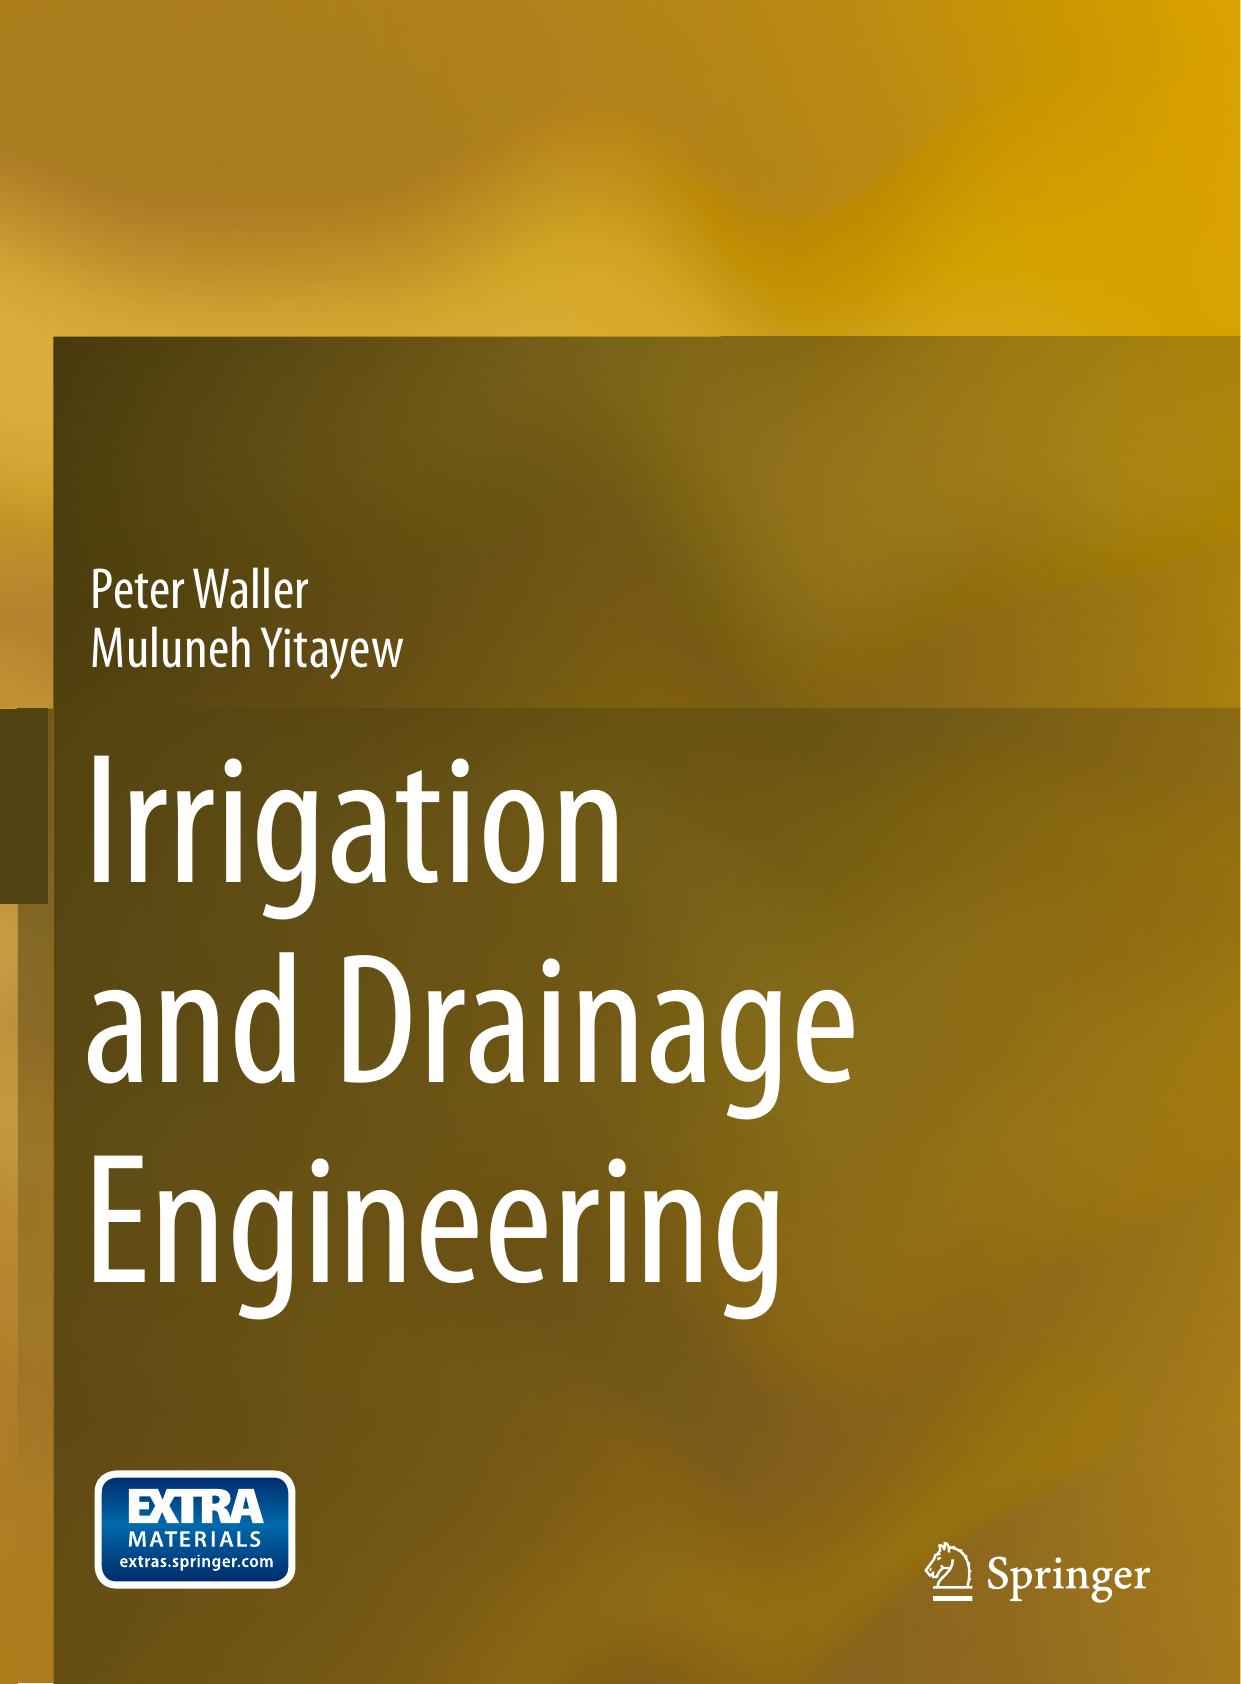 Irrigation and Drainage Engineering. 2016